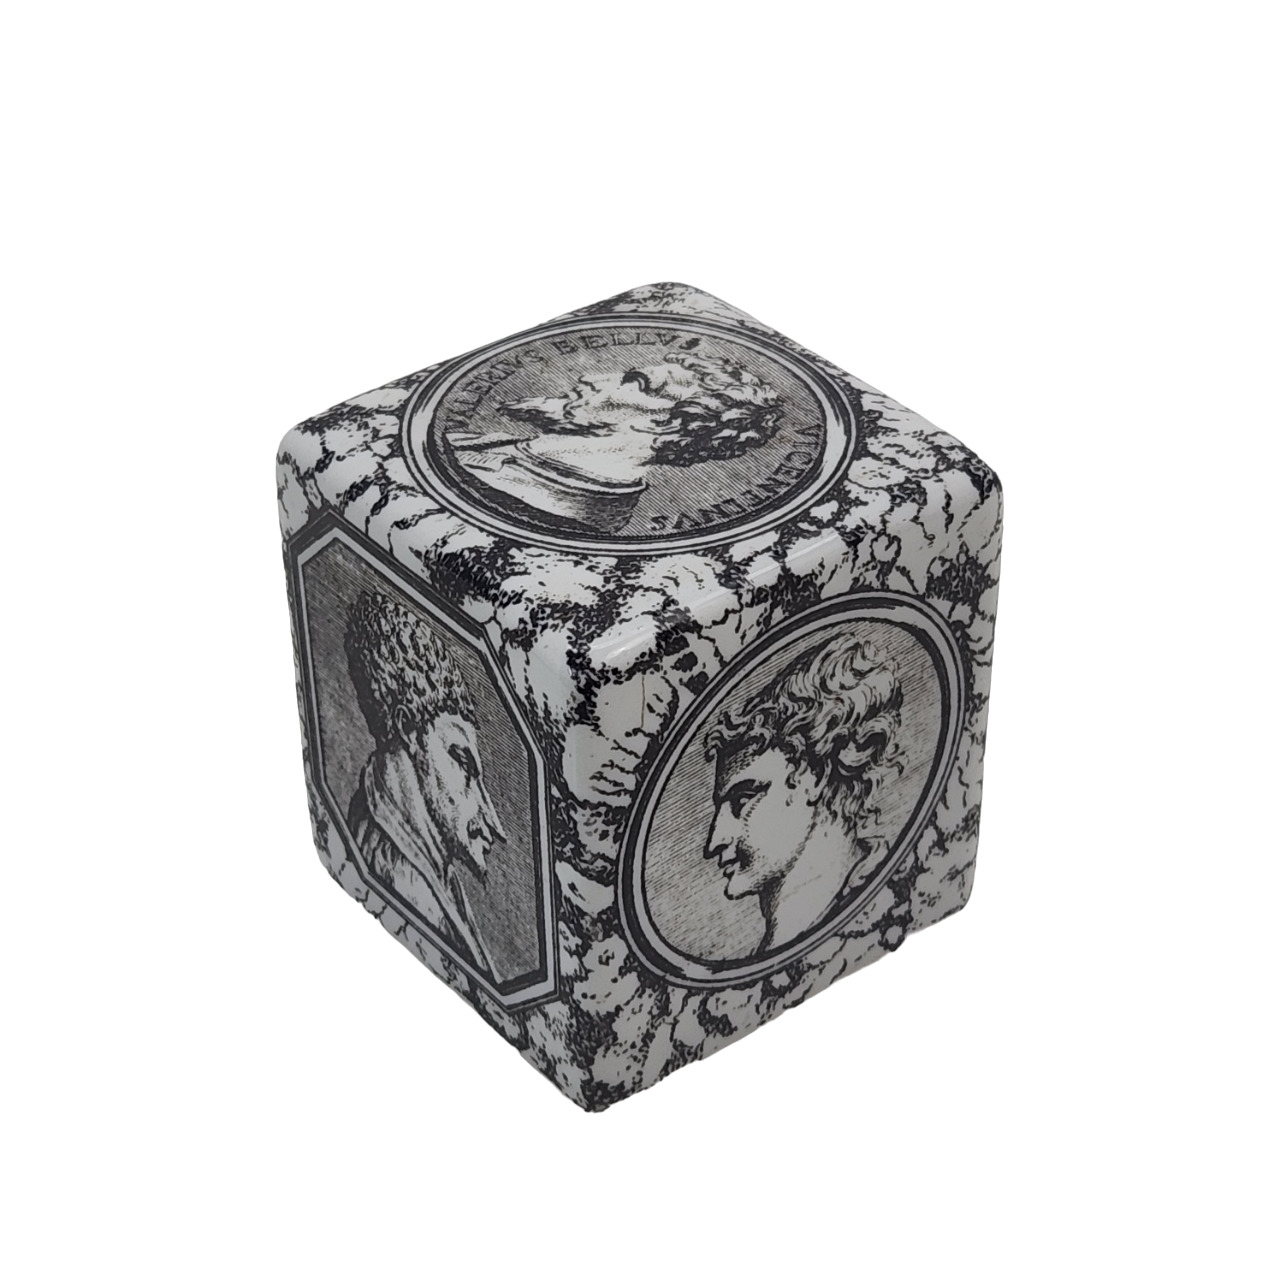 Vintage Italian Piero Fornasetti Roman Leaders Ceramic Cube Paperweight